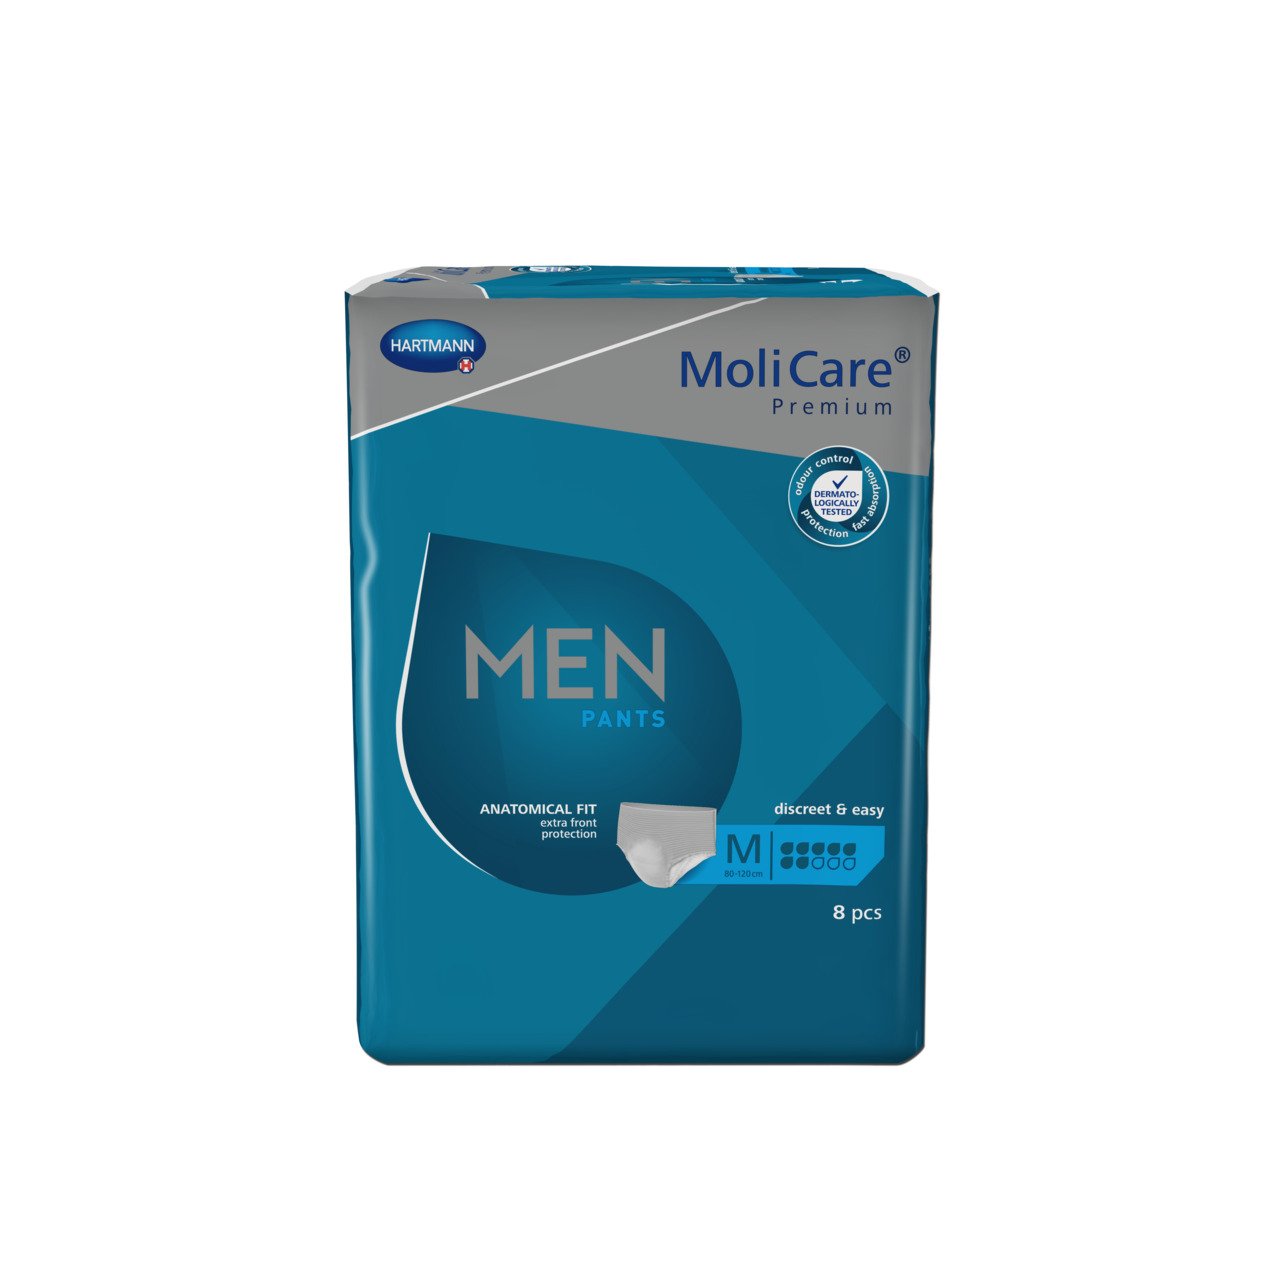 MoliCare Premium Men Pants 7D Med 32